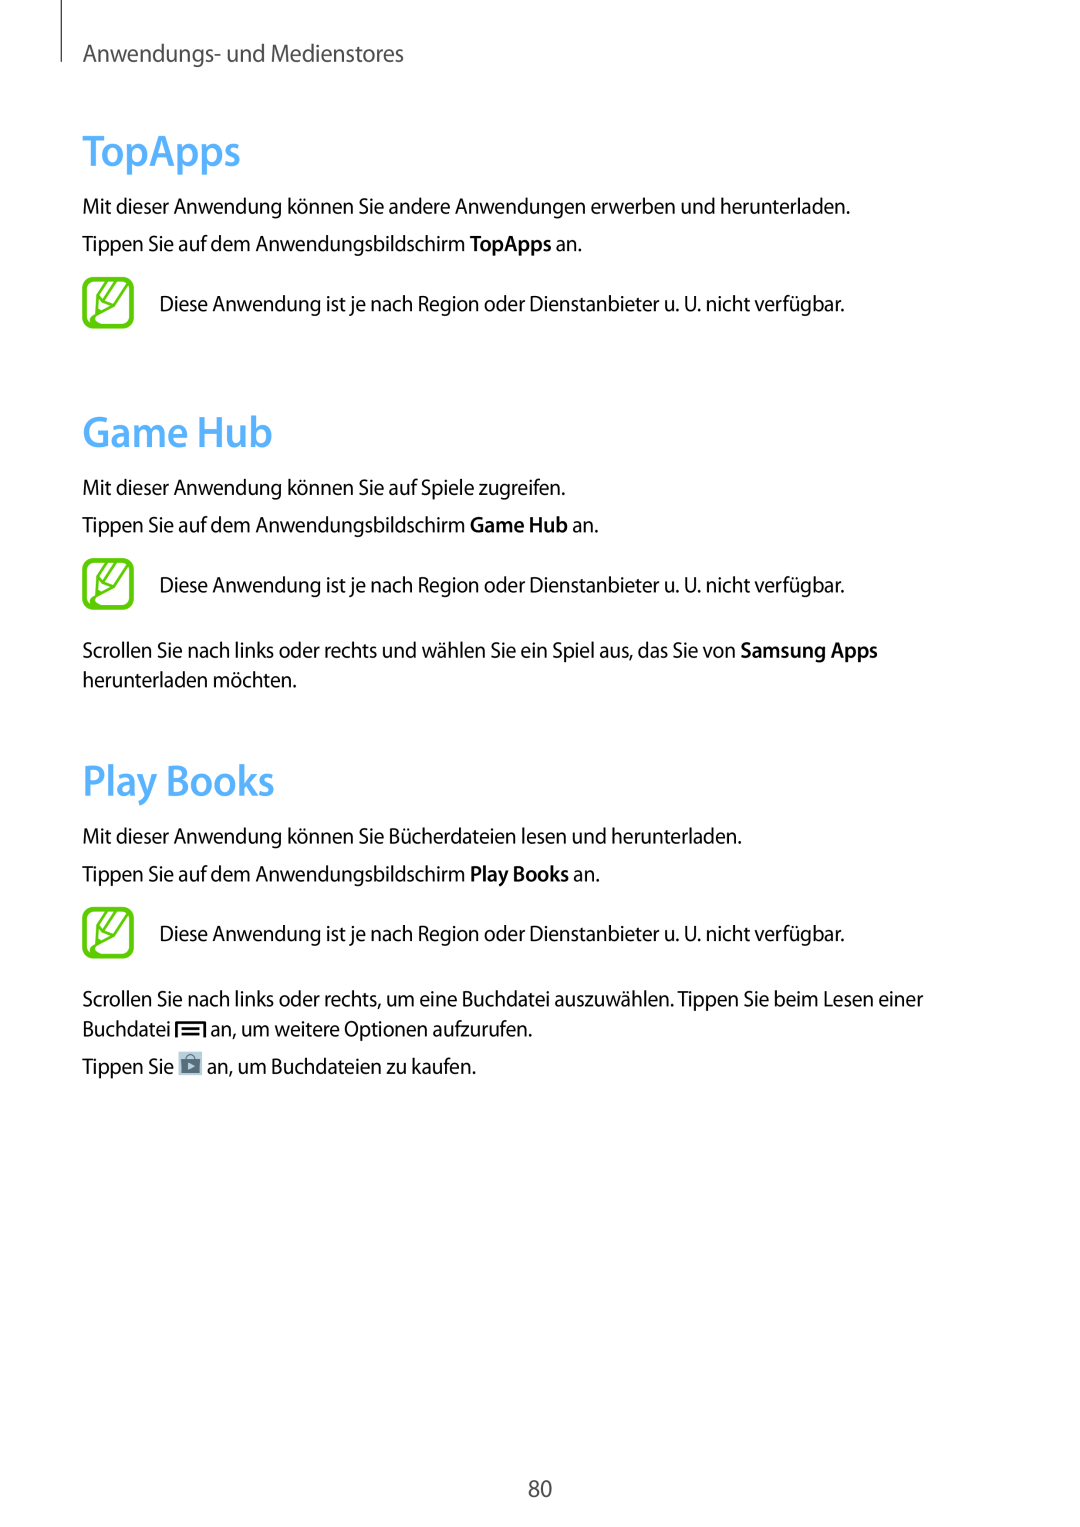 Samsung GT-I8190RWAXEO, GT-I8190RWNDTM, GT-I8190RWNDBT manual TopApps, Game Hub, Play Books, Anwendungs- und Medienstores 